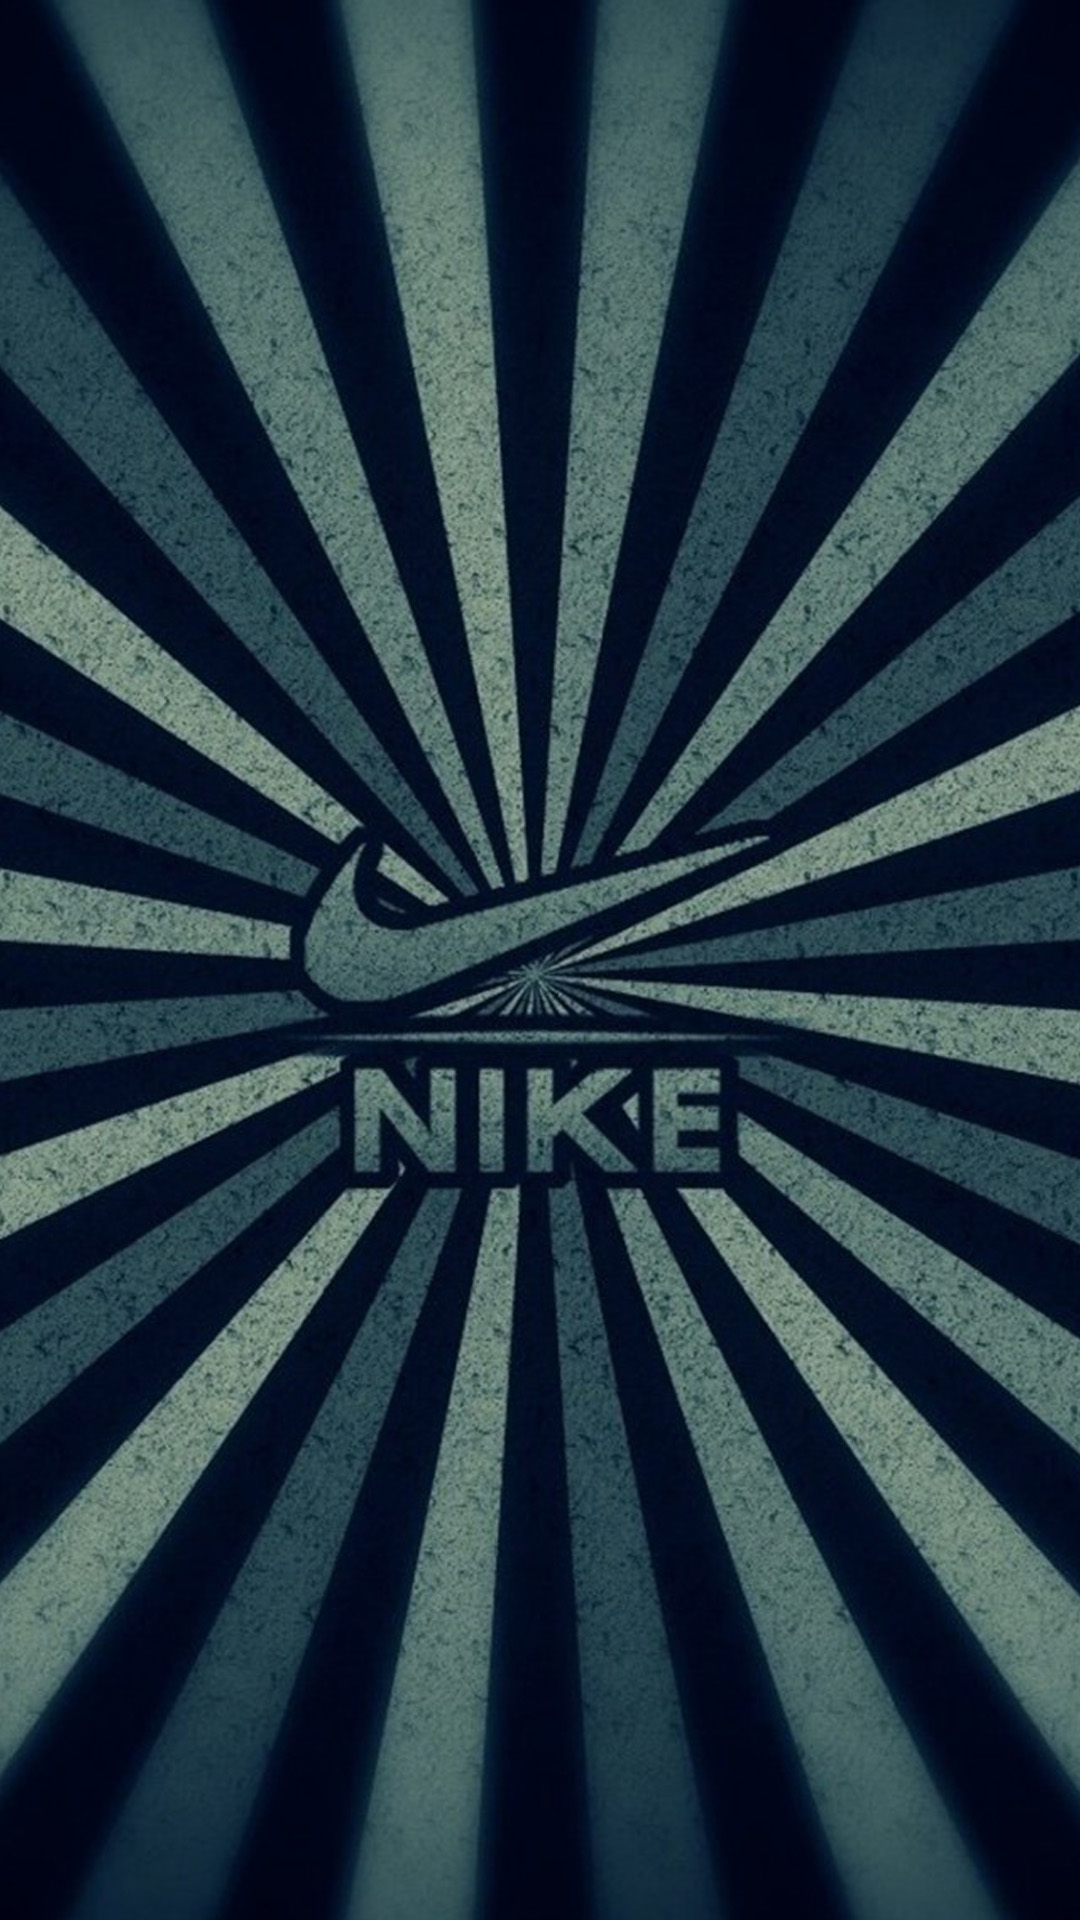 Nike ロゴマーク かっこいいクール Iphoneスマホ壁紙 待ち受け画像 男子向け Naver まとめ